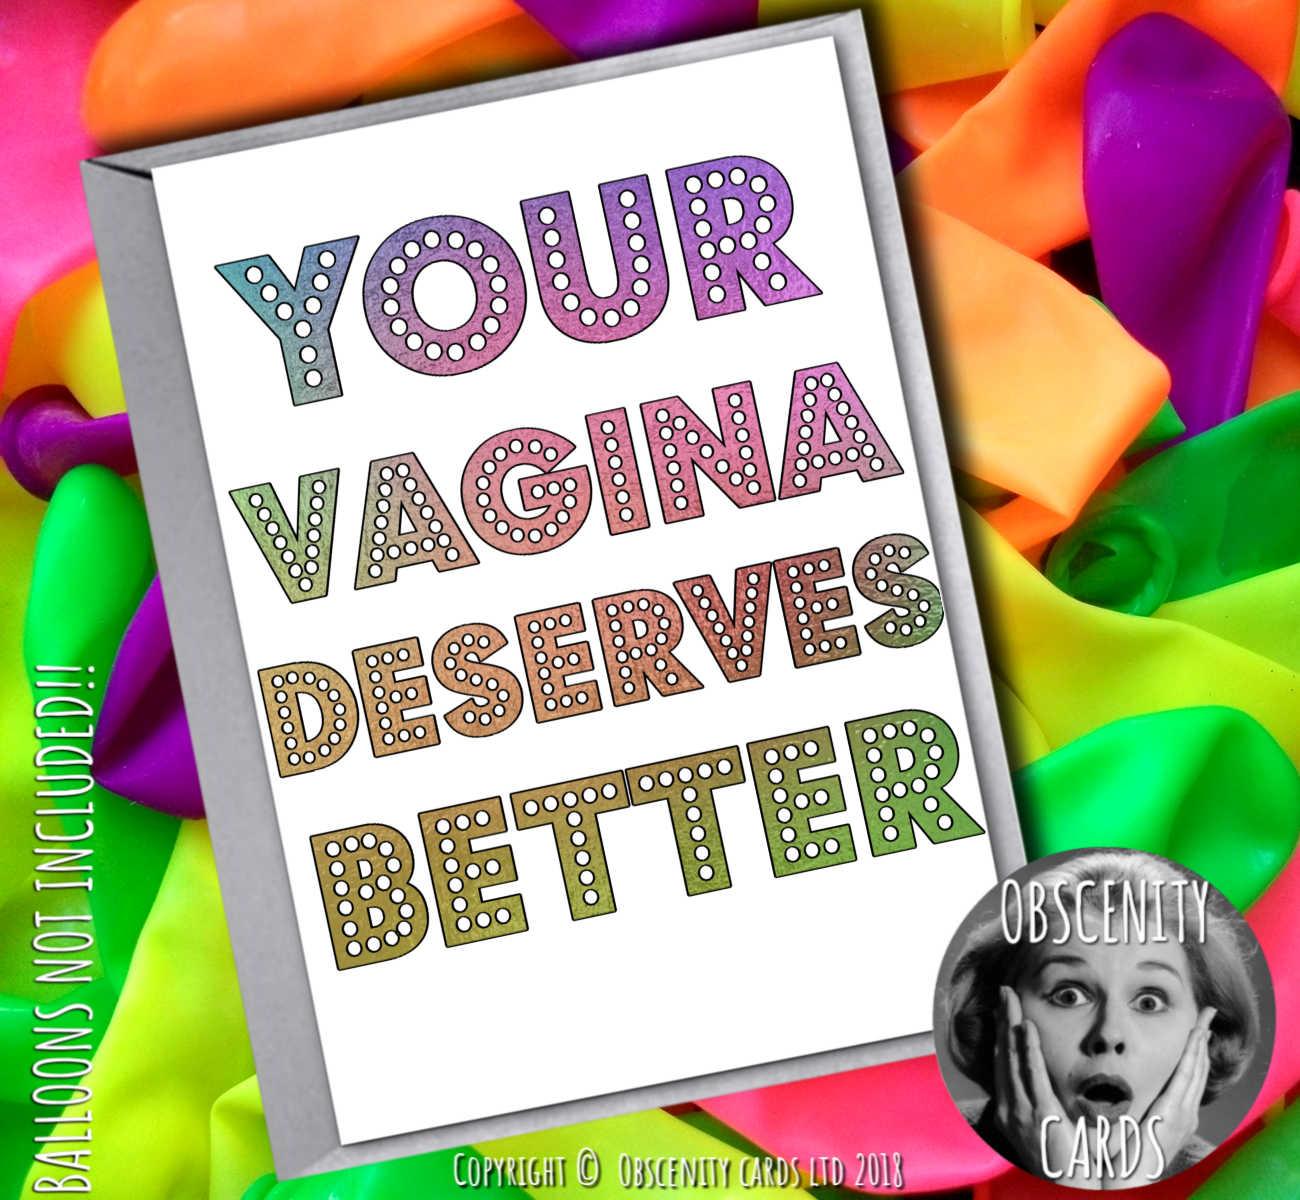 Your vagina deserves better - Break Up Card